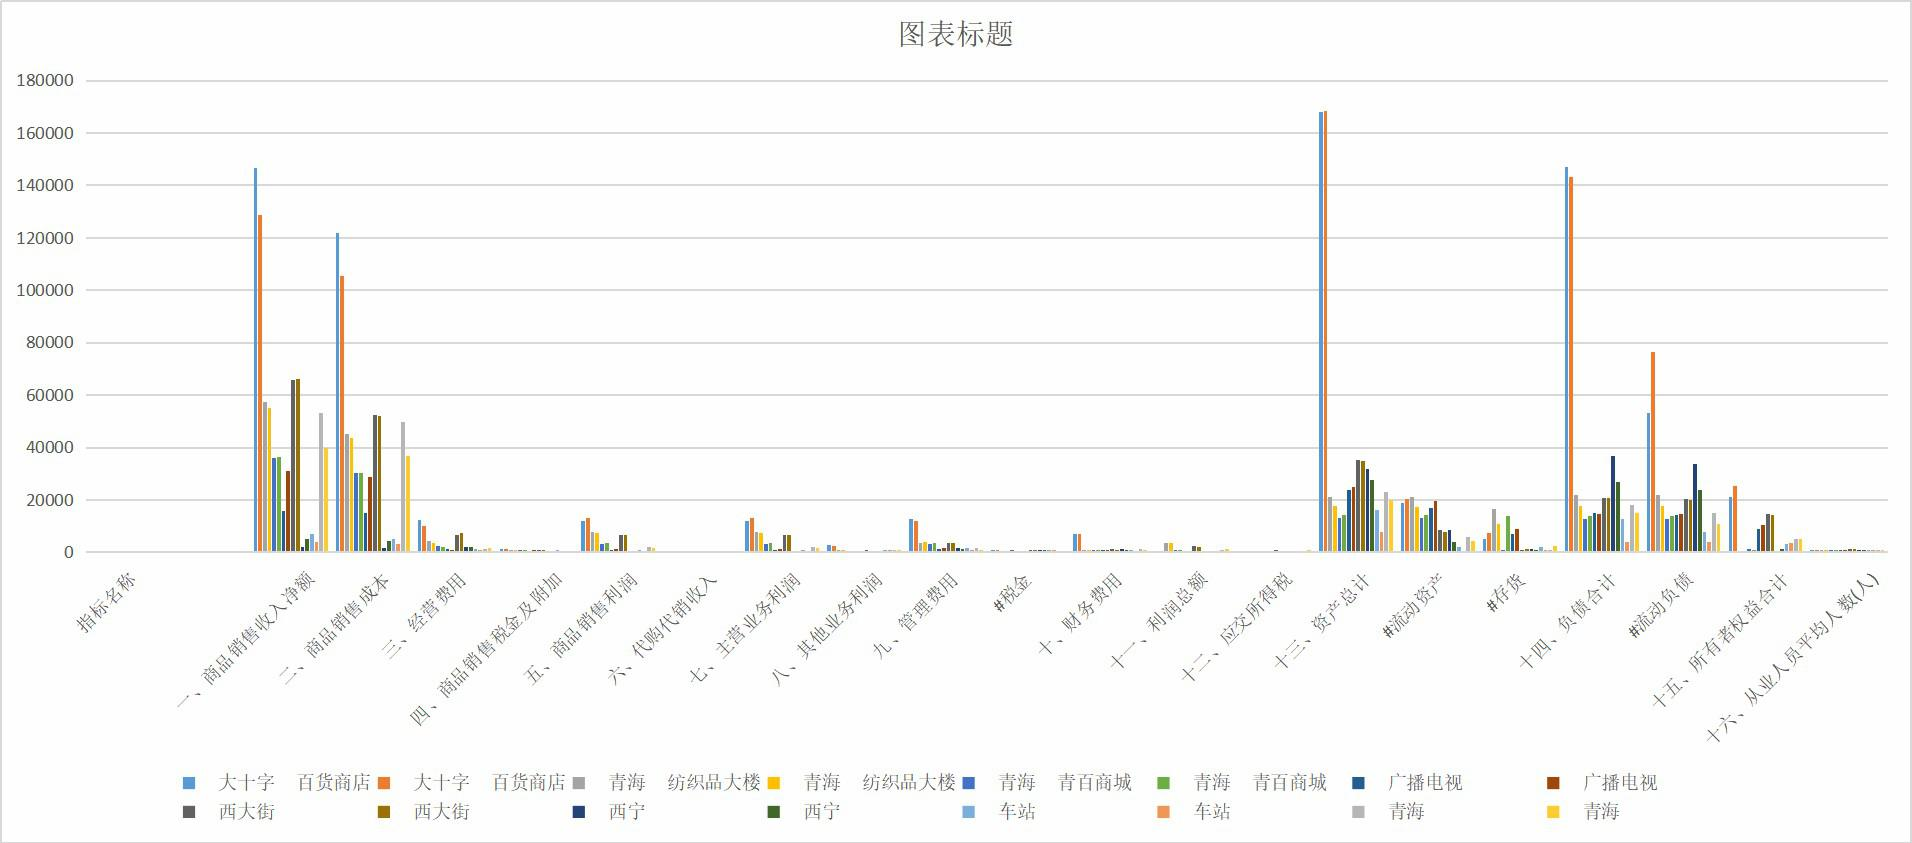 Main economic indicators of key wholesale and retail trade enterprises in Qinghai Province (1999-2000)